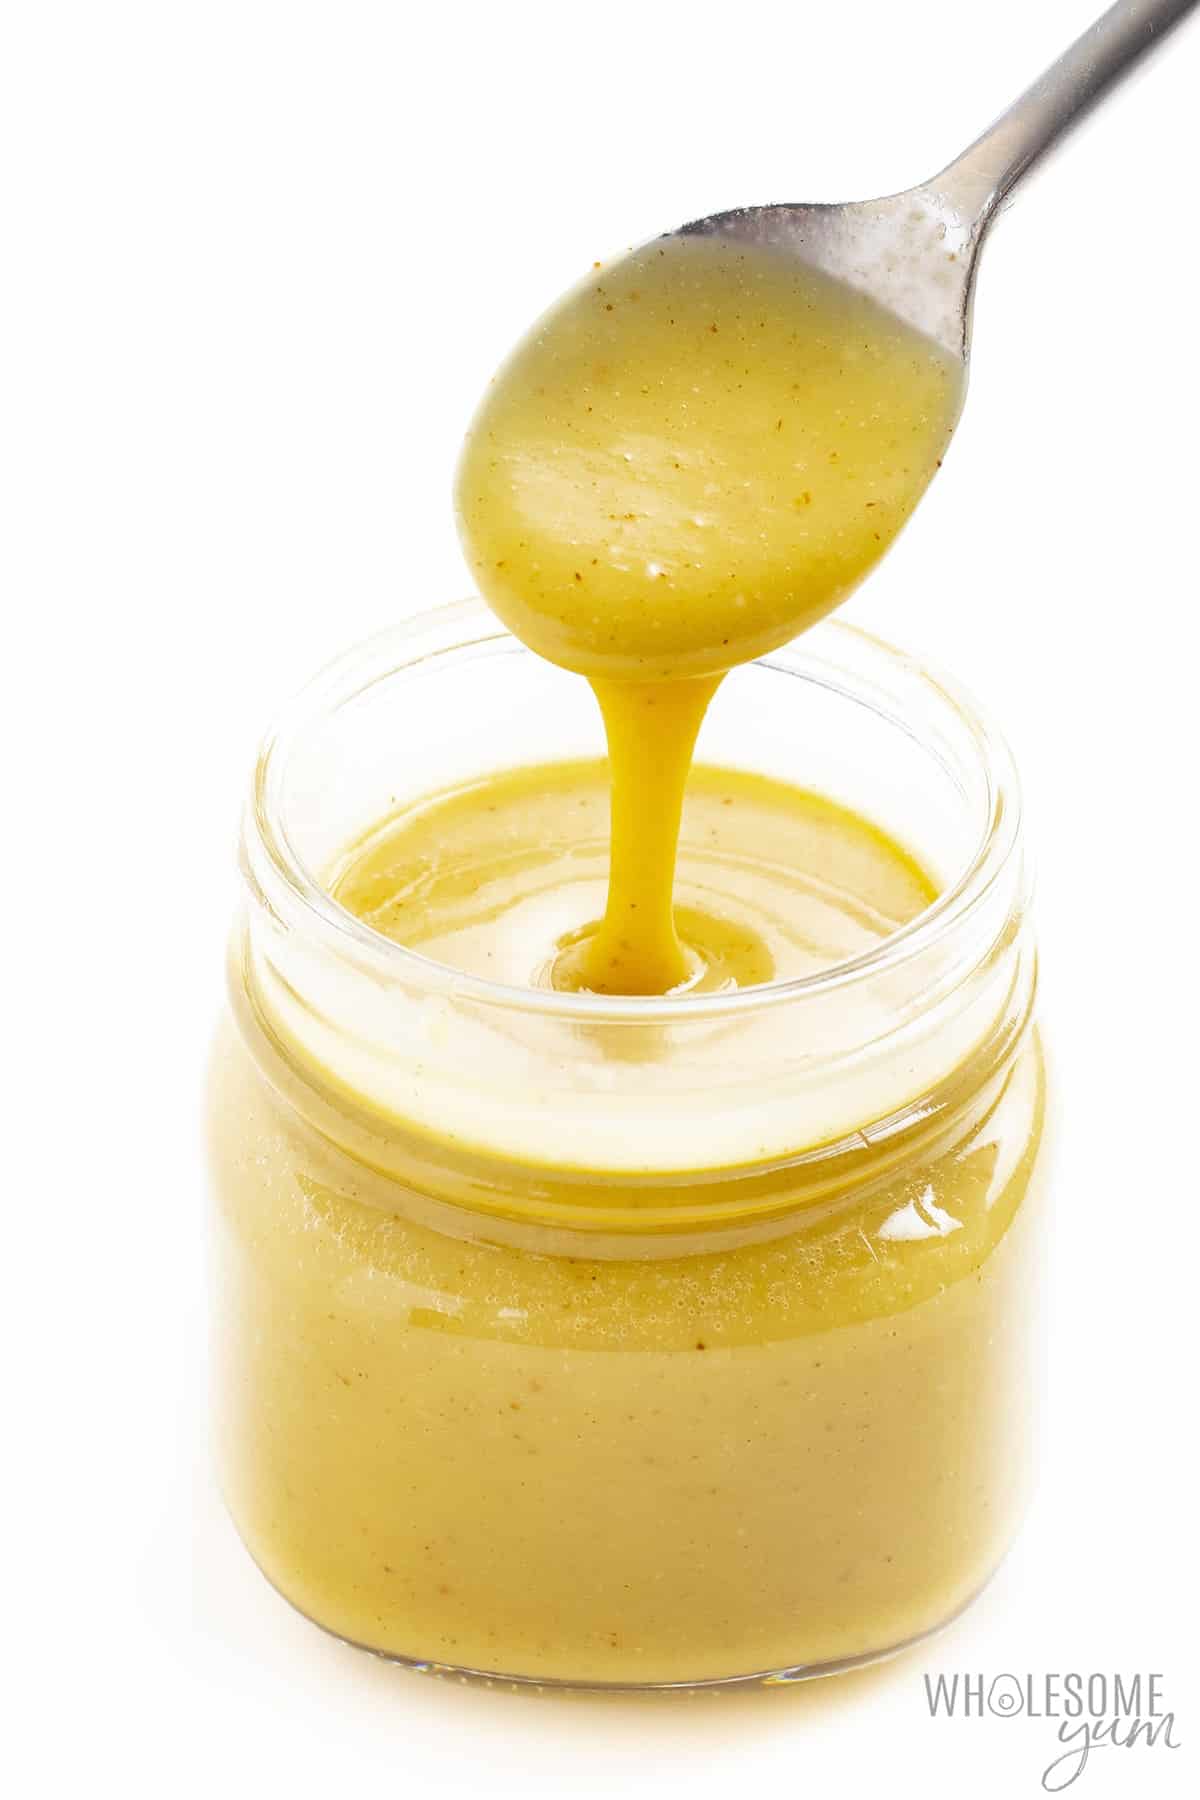 Sugar-free honey mustard in jar with spoon.